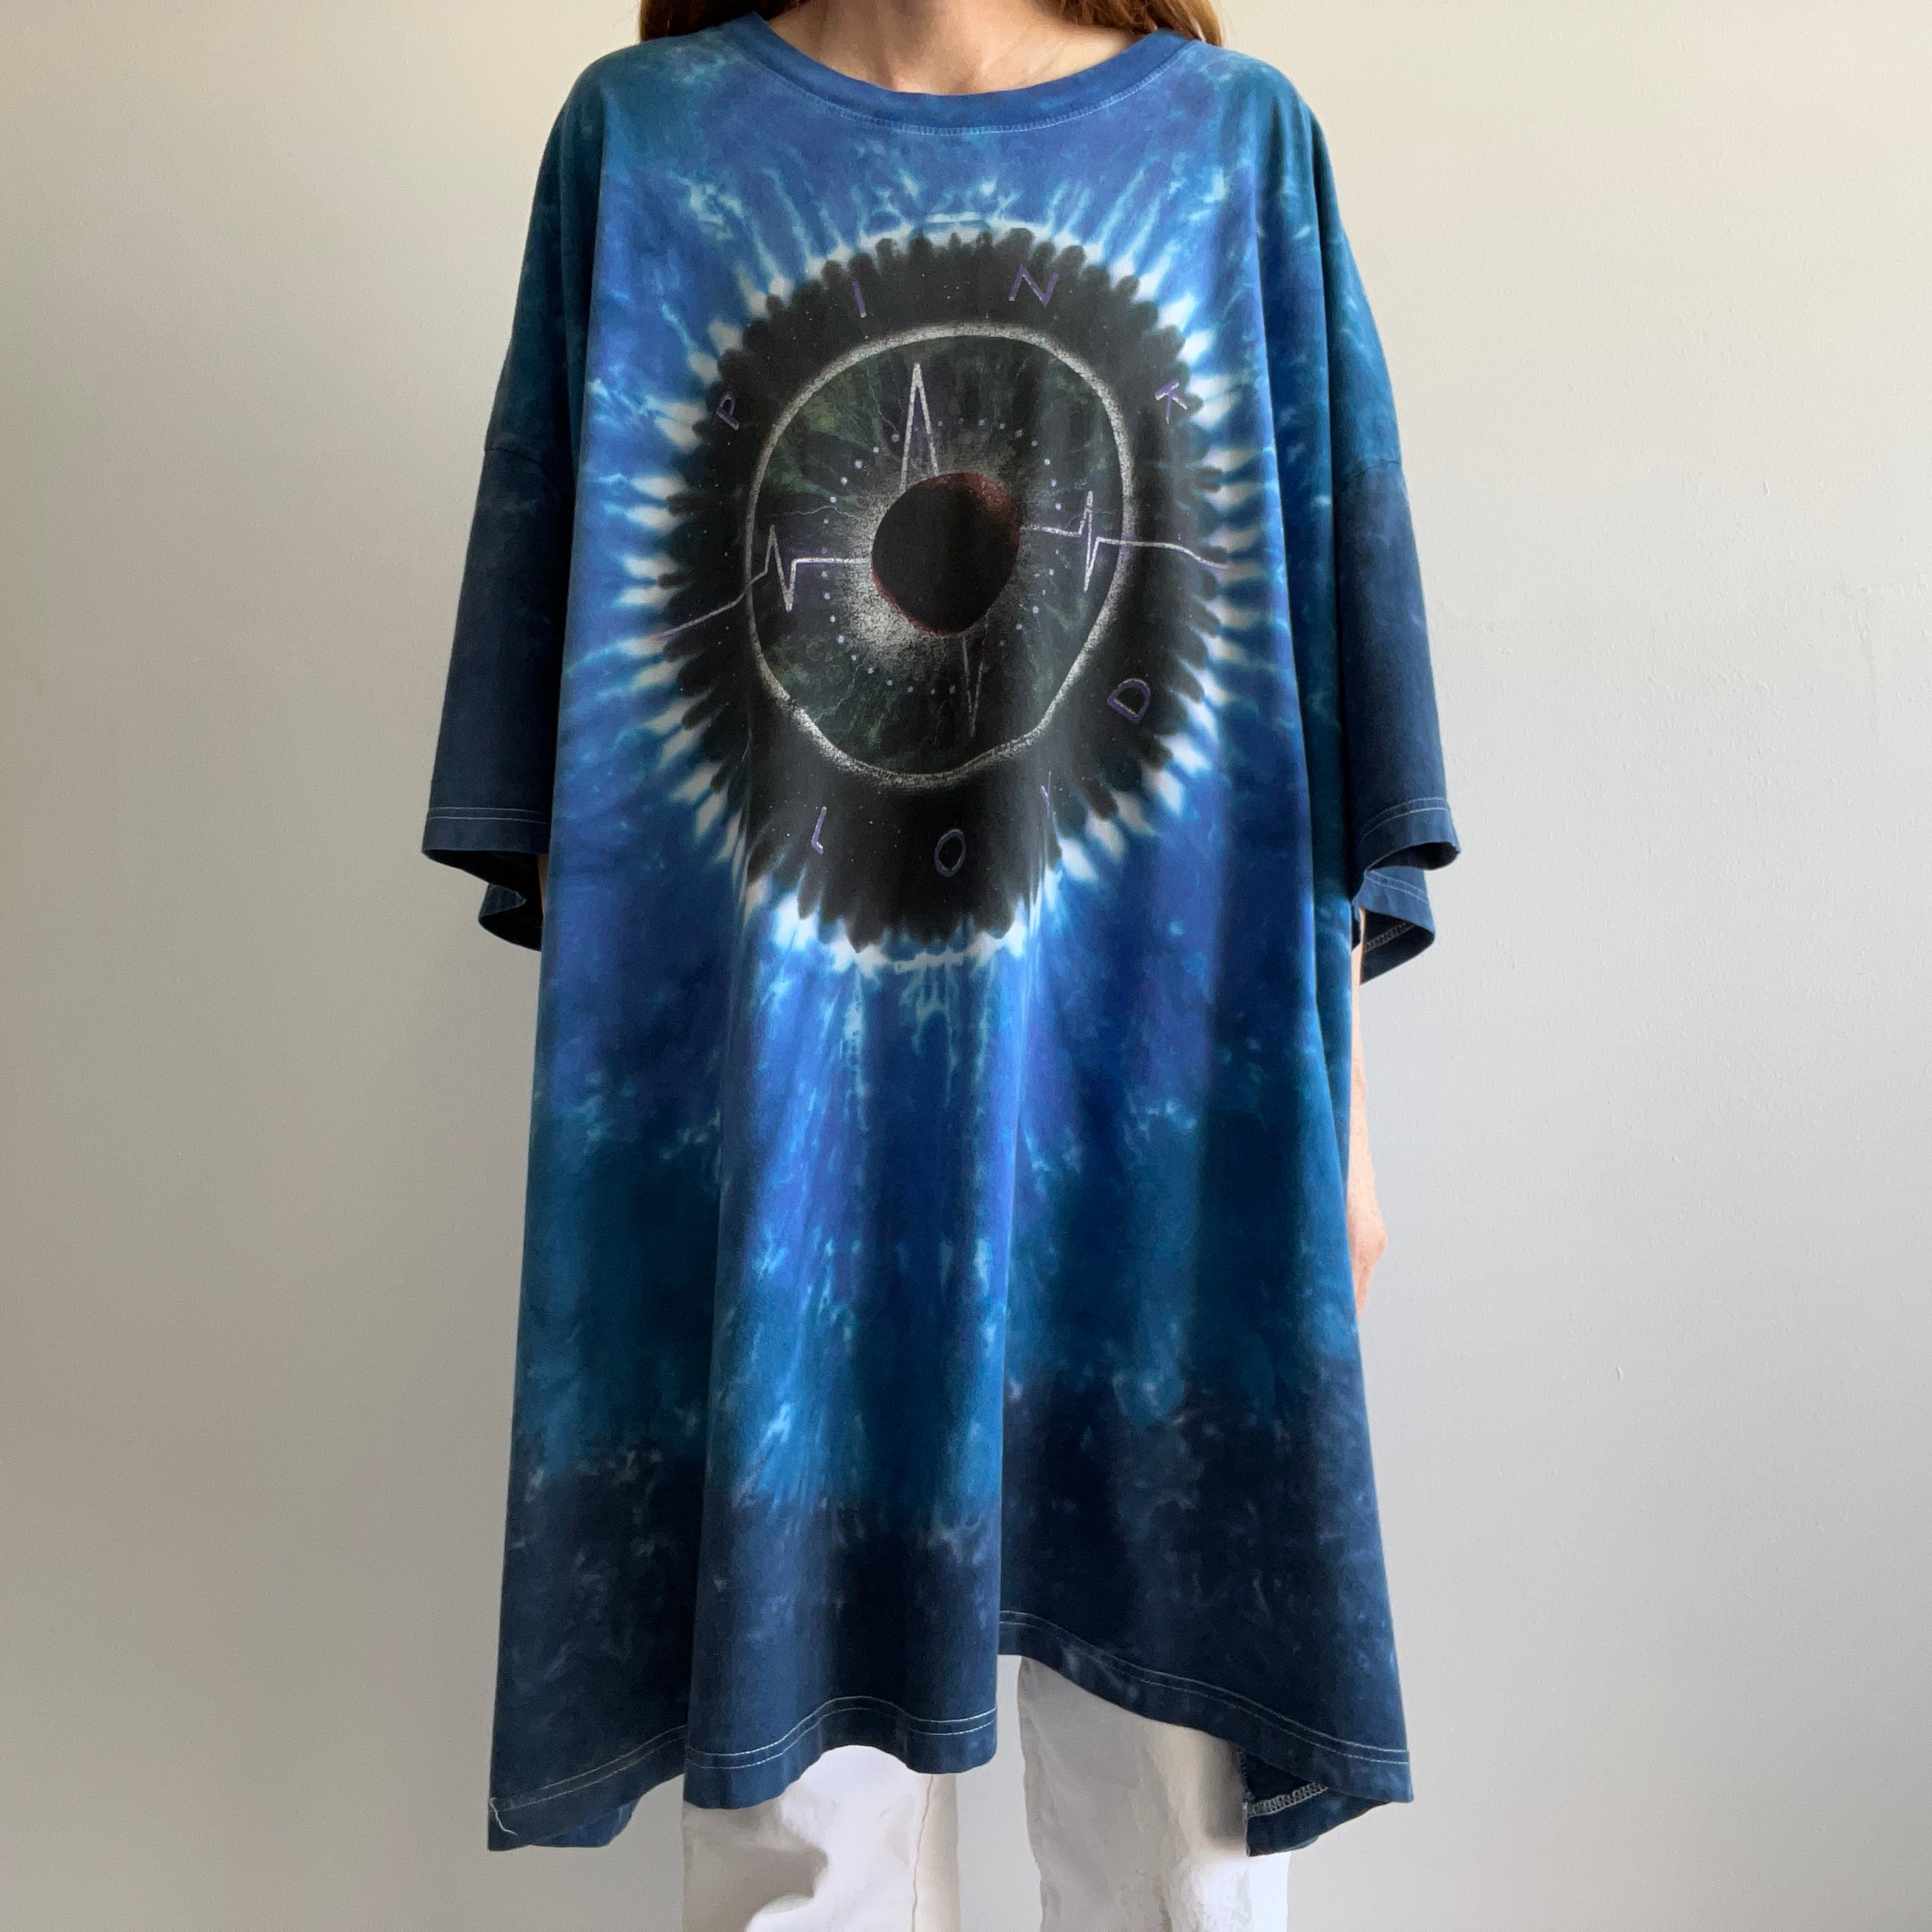 1990/2000s Very Much Larger Pink Floyd T-Shirt/Dress by Liquid Blue